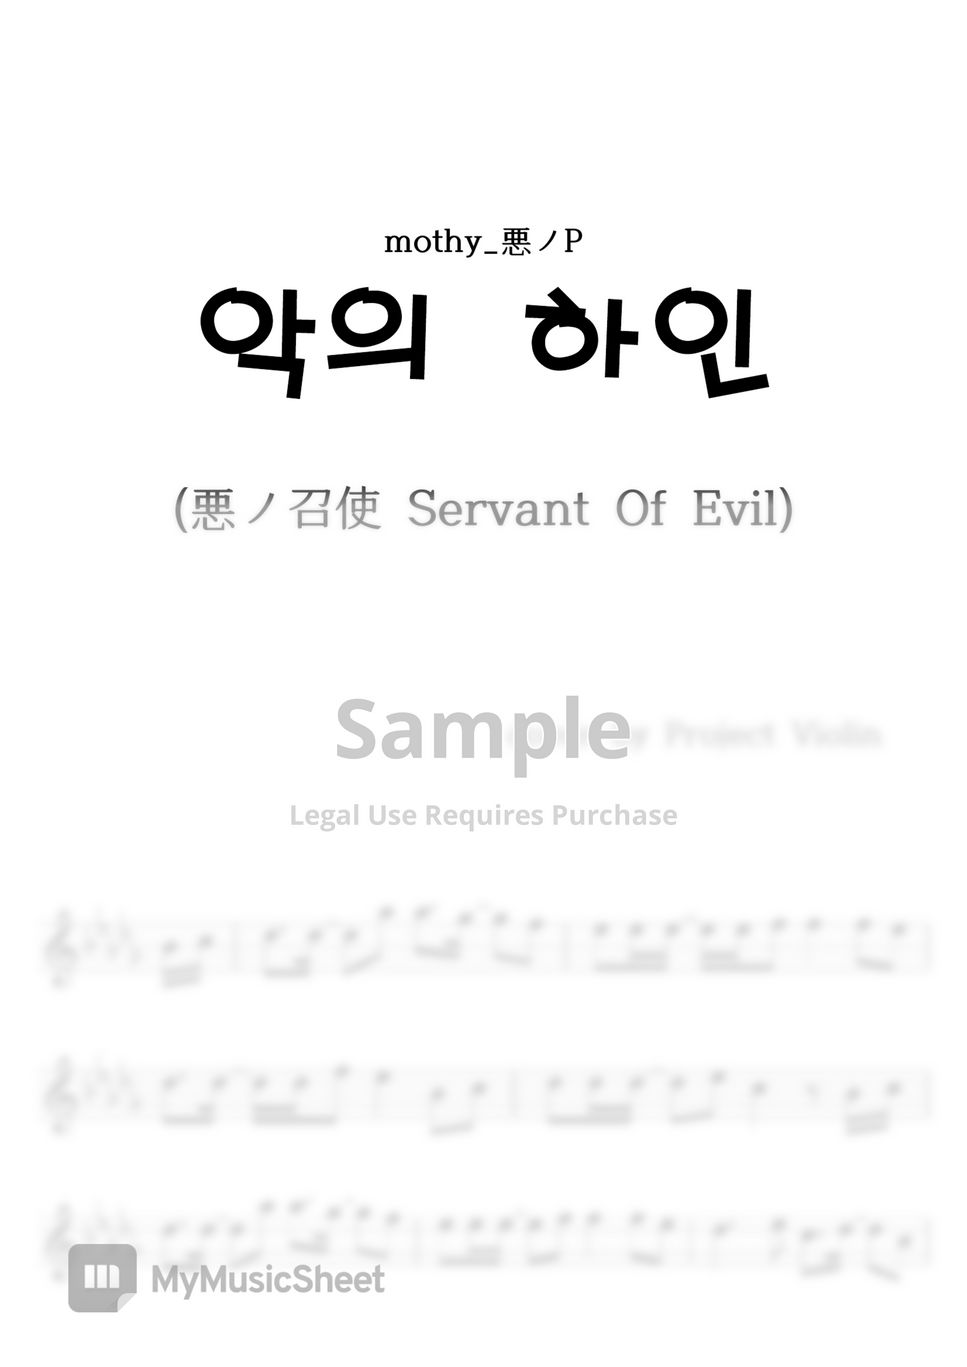 mothy_悪ノP - 악의 하인(悪ノ召使 Servant Of Evil) by Project Violin